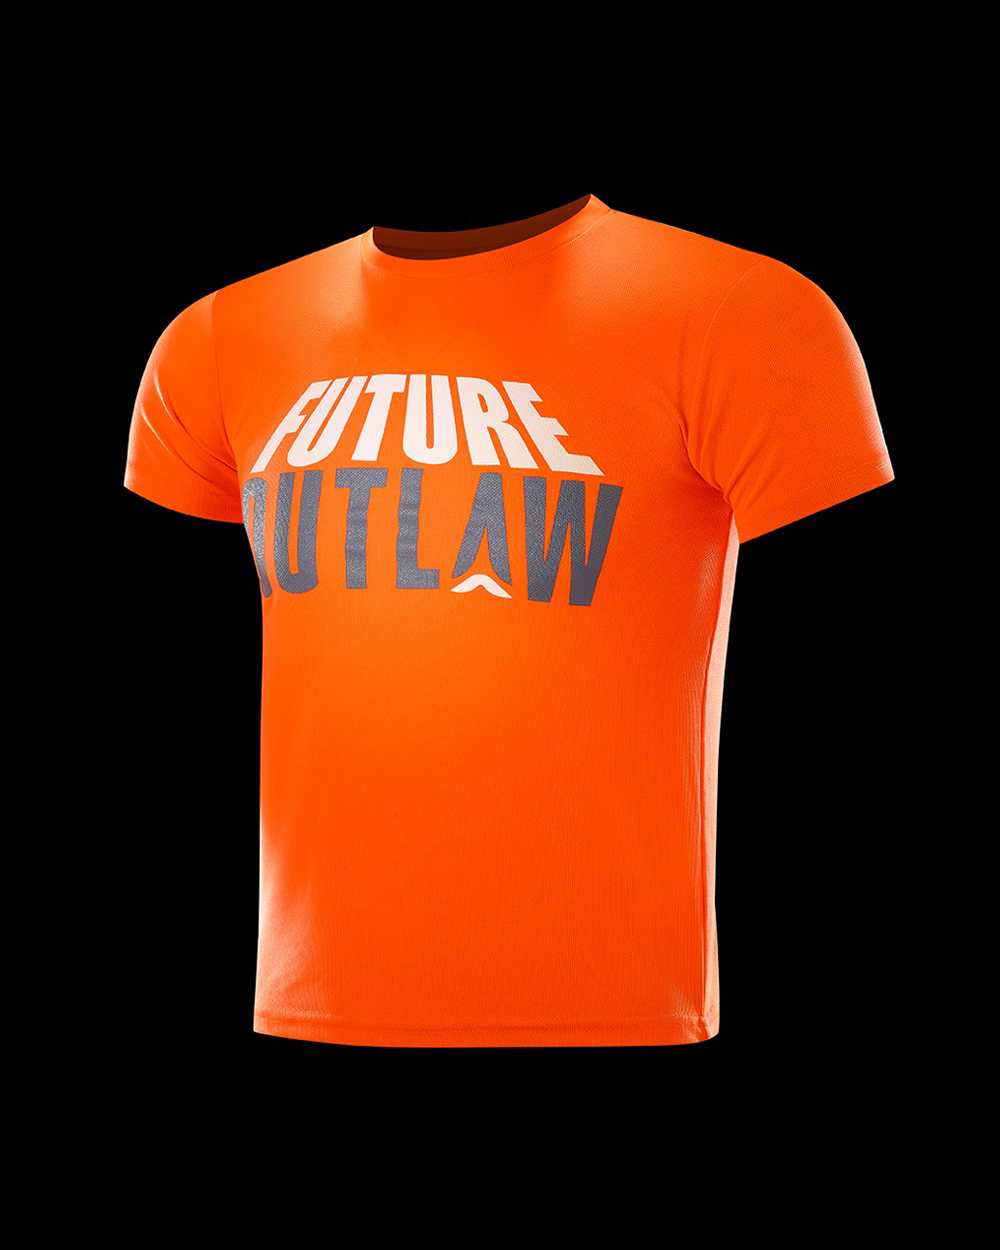 Future Outlaw Kids Orange T-shirt